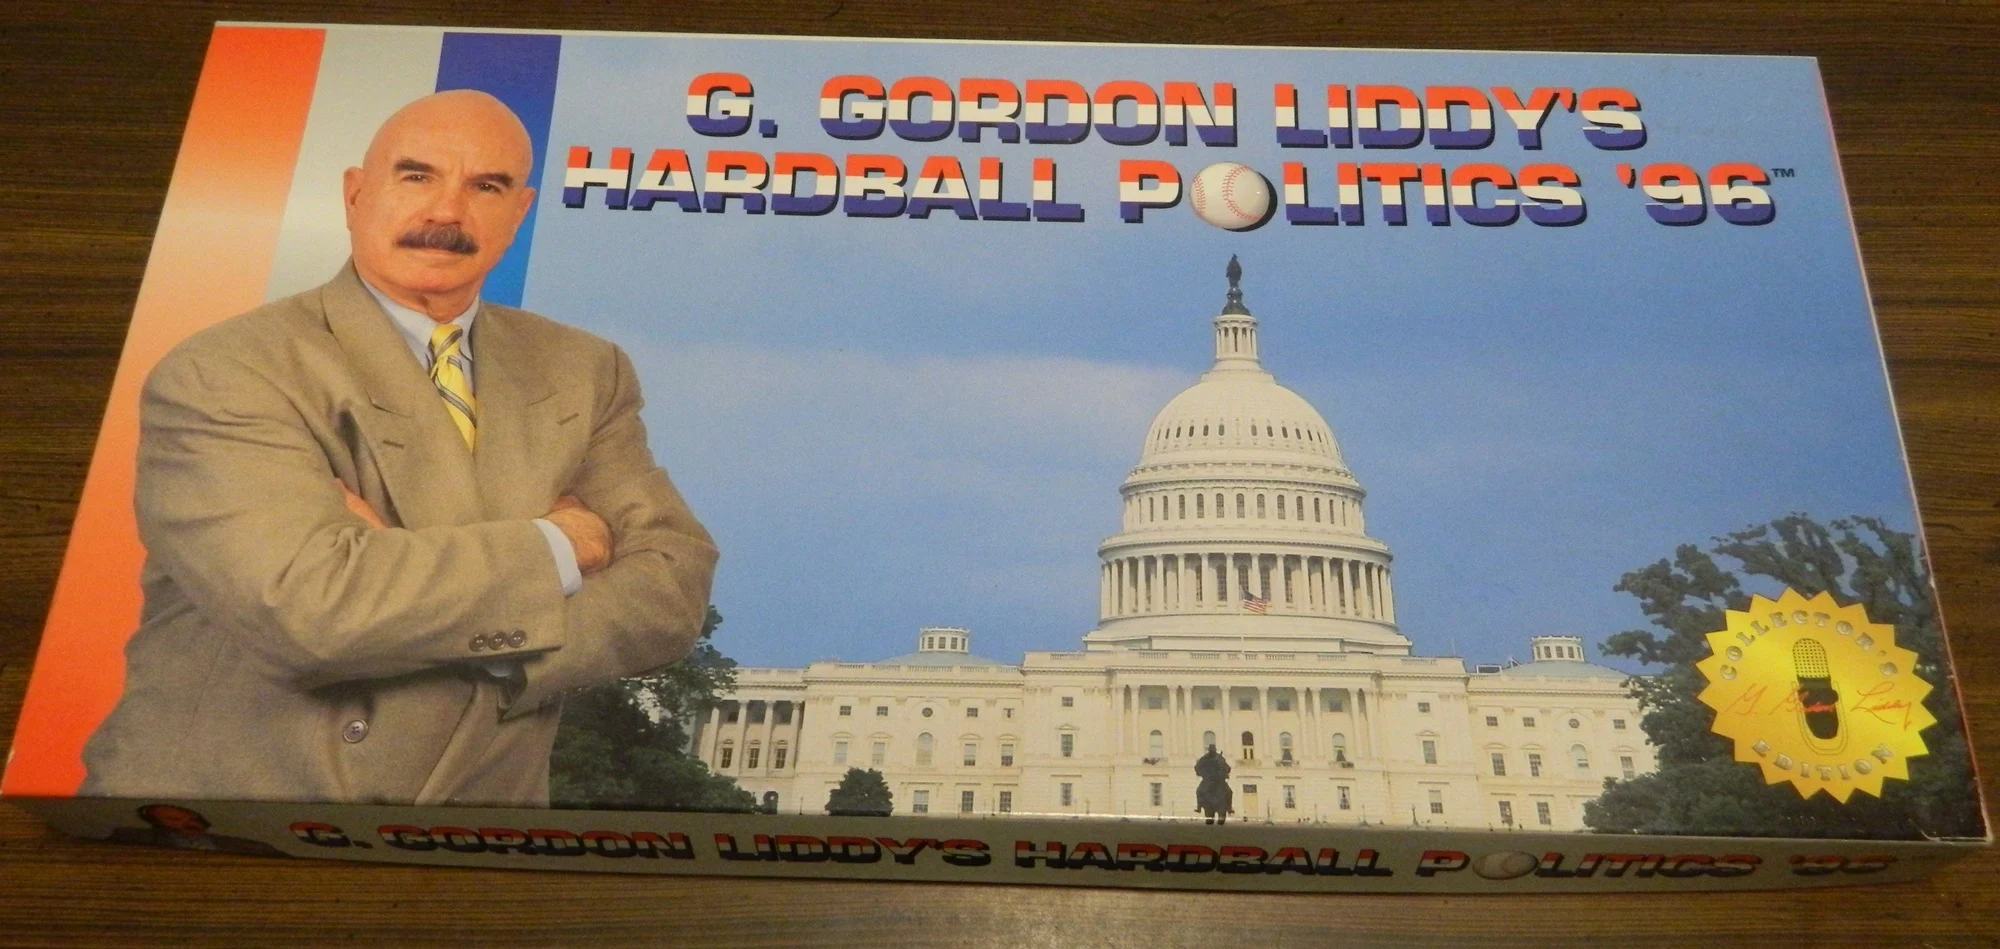 Box for G Gordon Liddy's Harball Politics '96